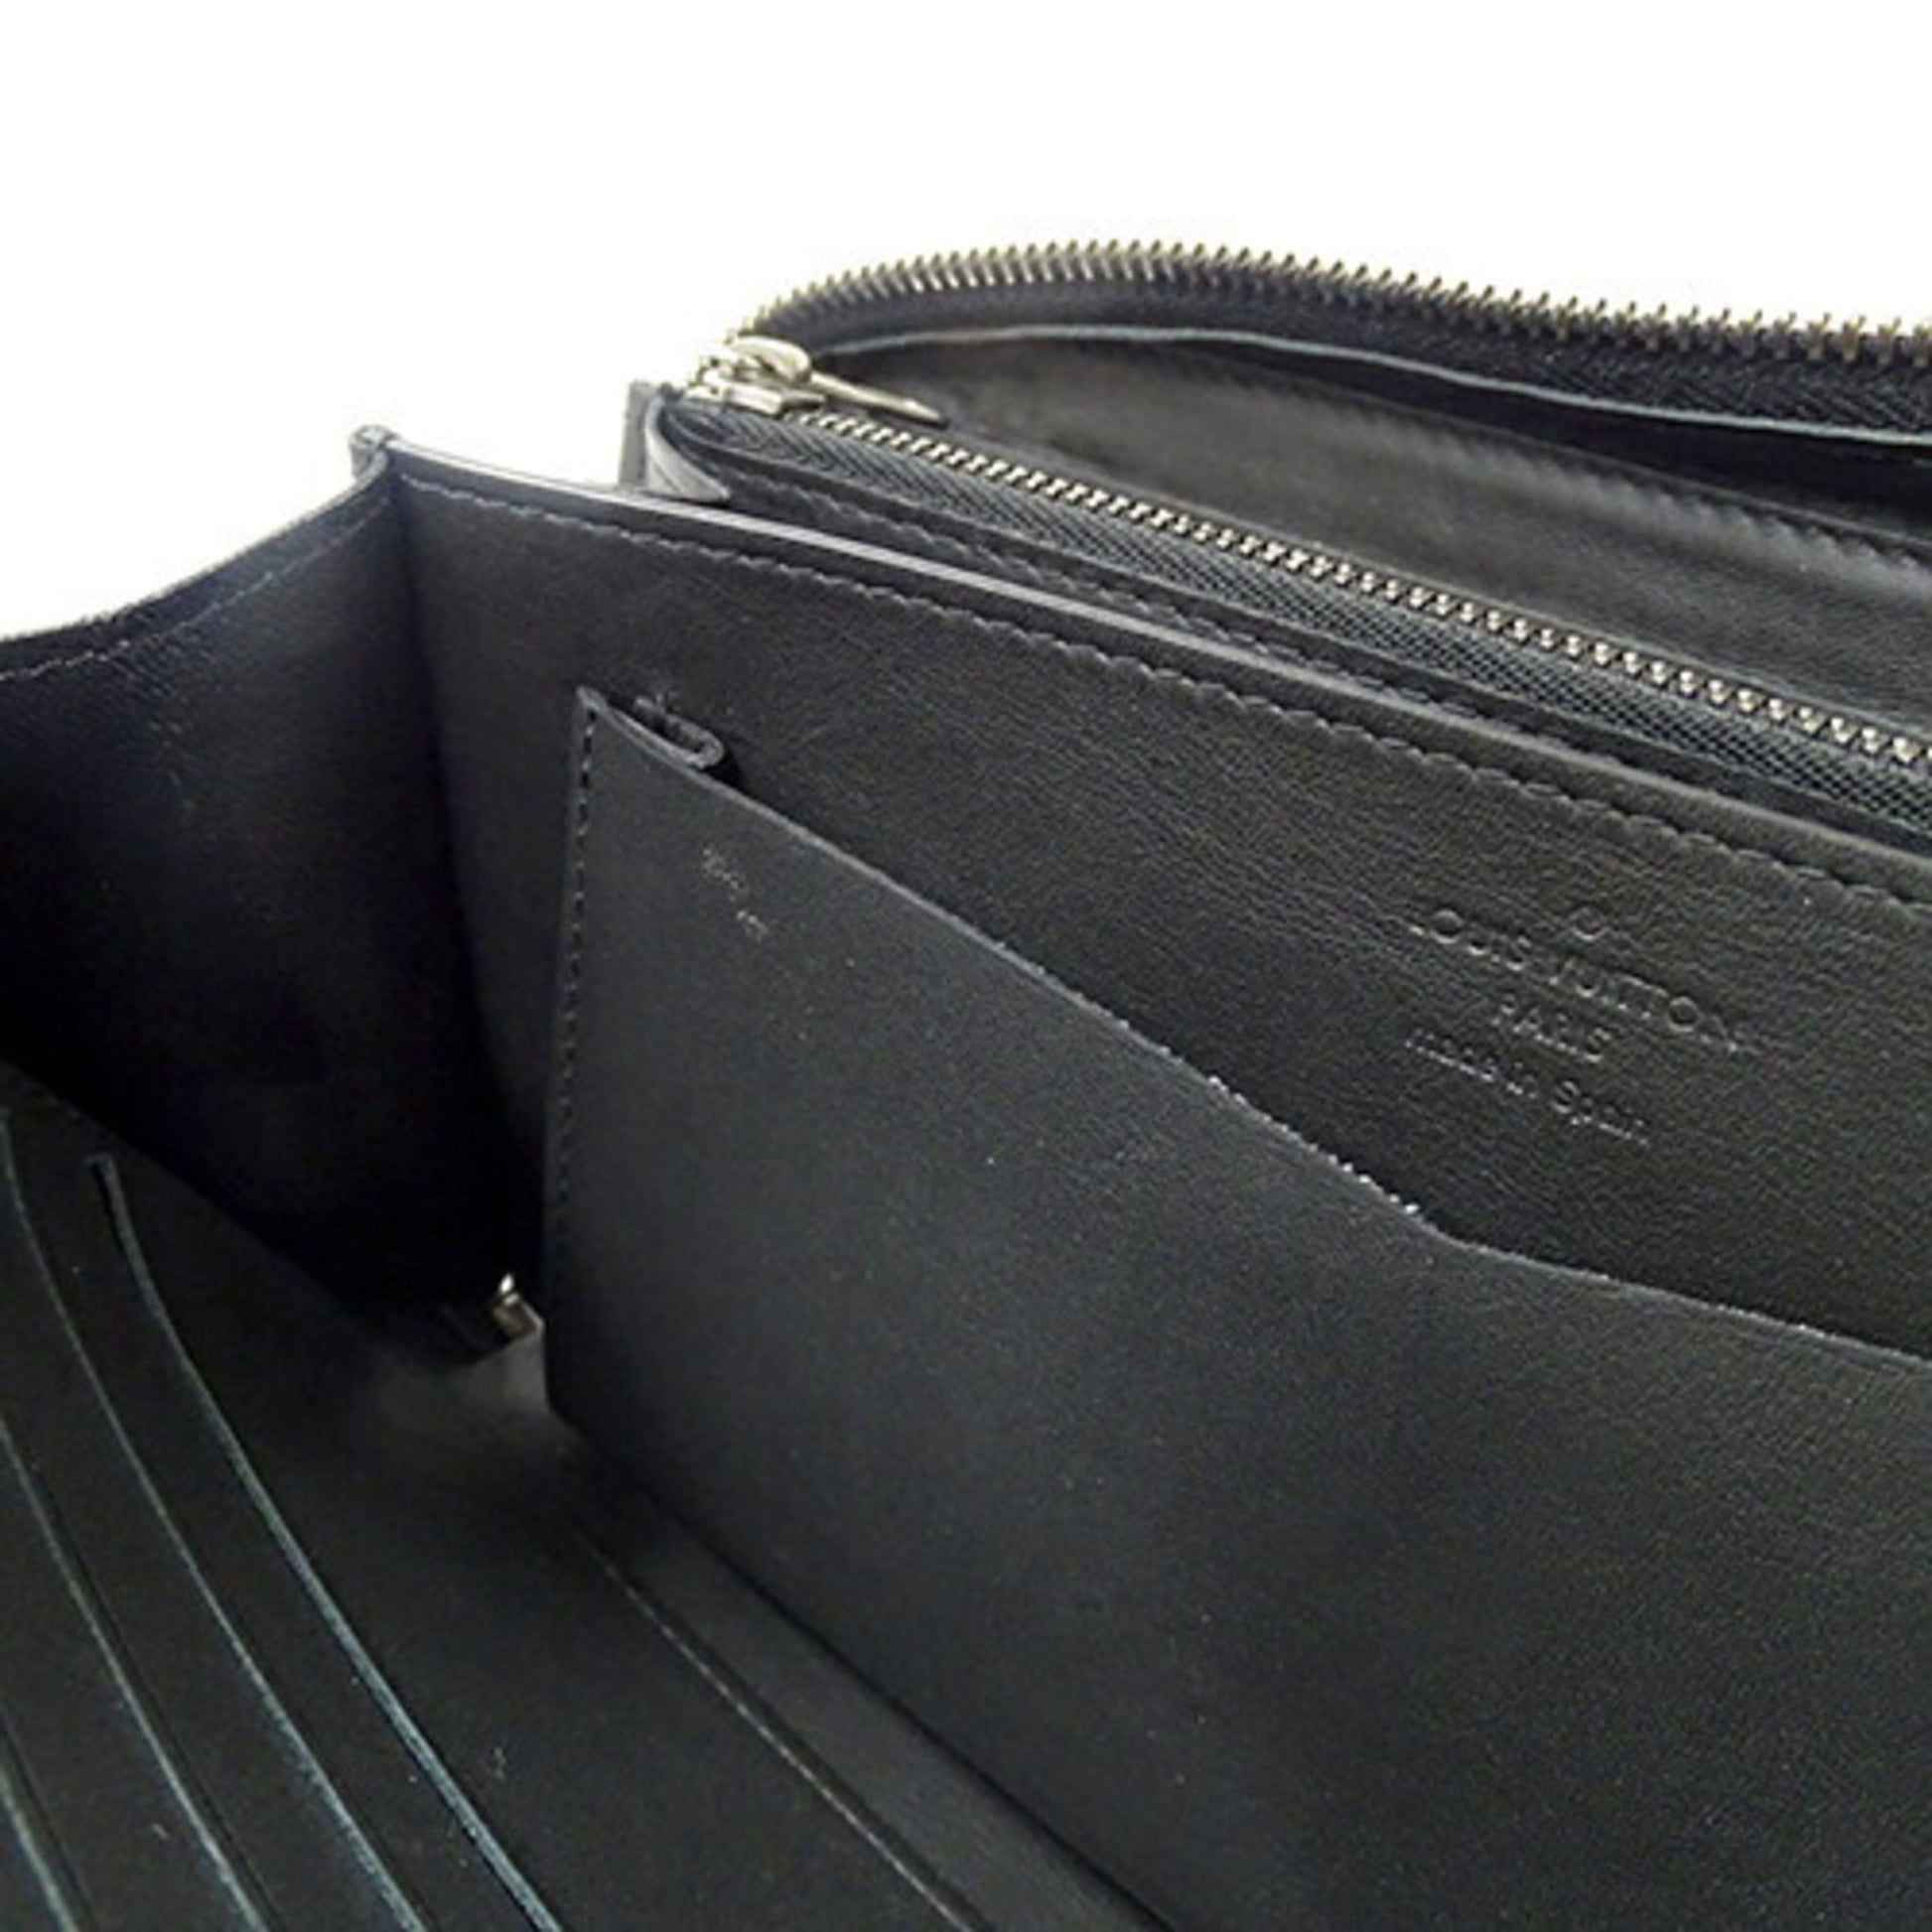 Insifinity - Louis Vuitton LV Men's Wallet with Coin Purse (Damier Graphite)